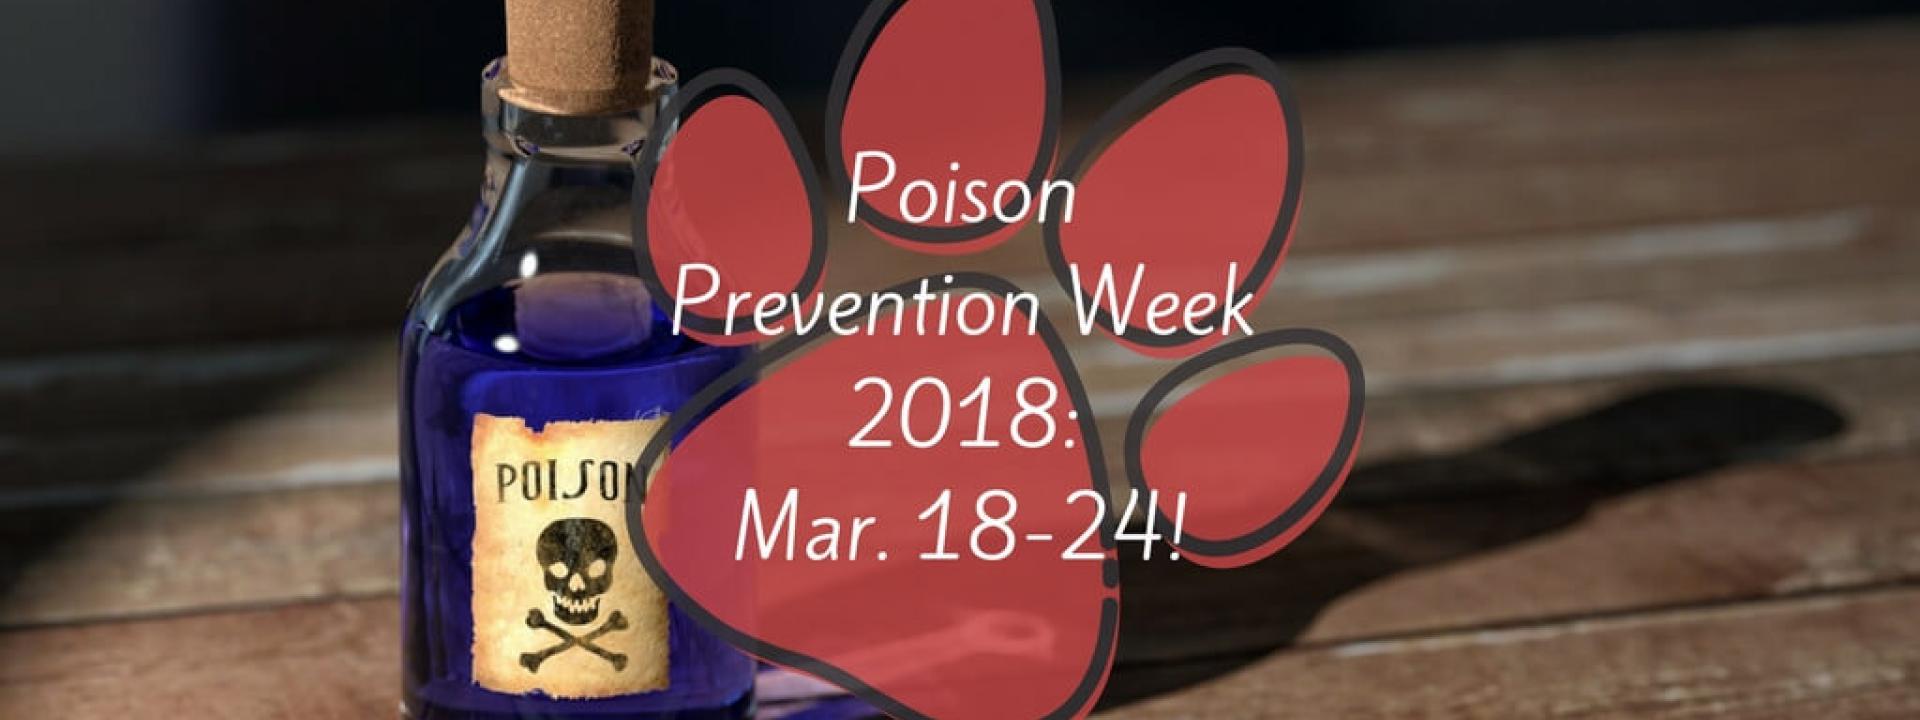 poison-prevention-week-Blog-Header.jpg